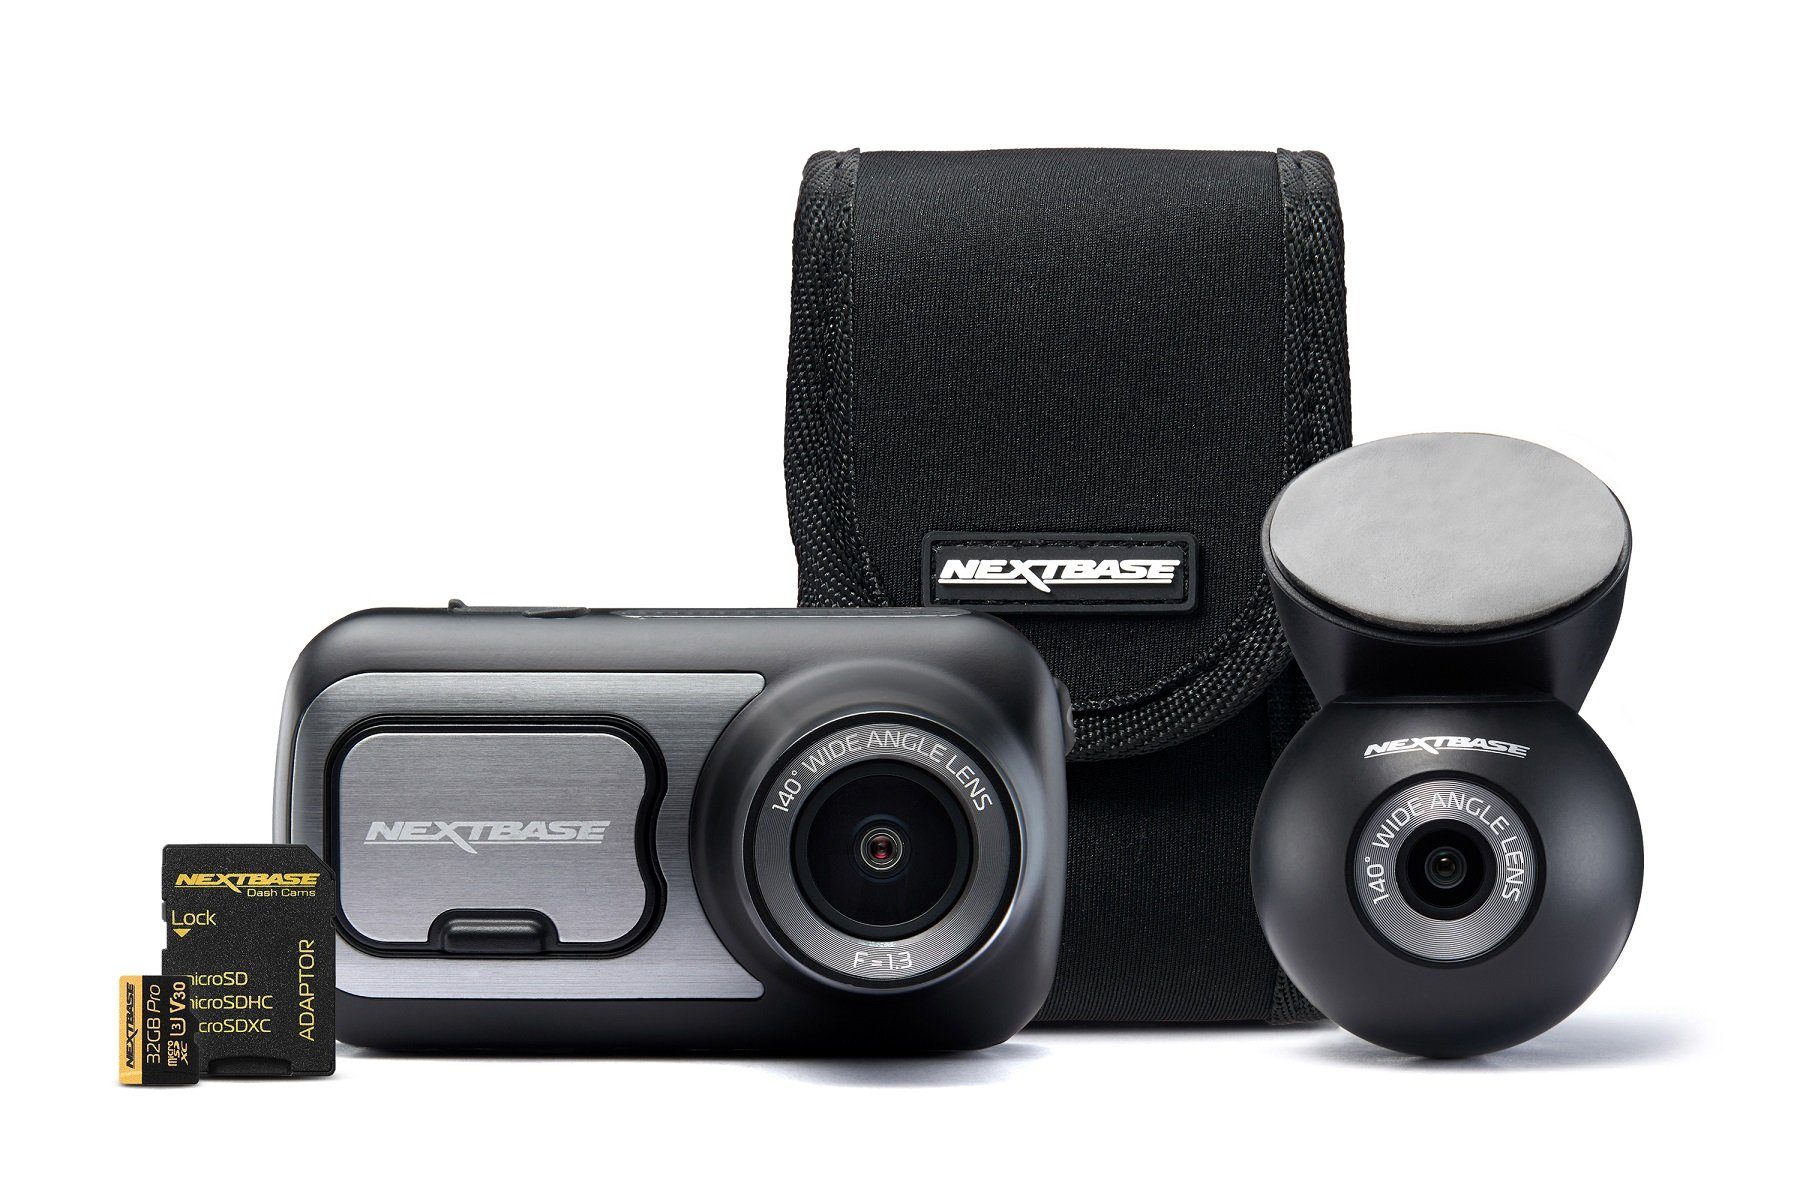 Nextbase Nextbase Limited Edition Bundle Dashcam 422